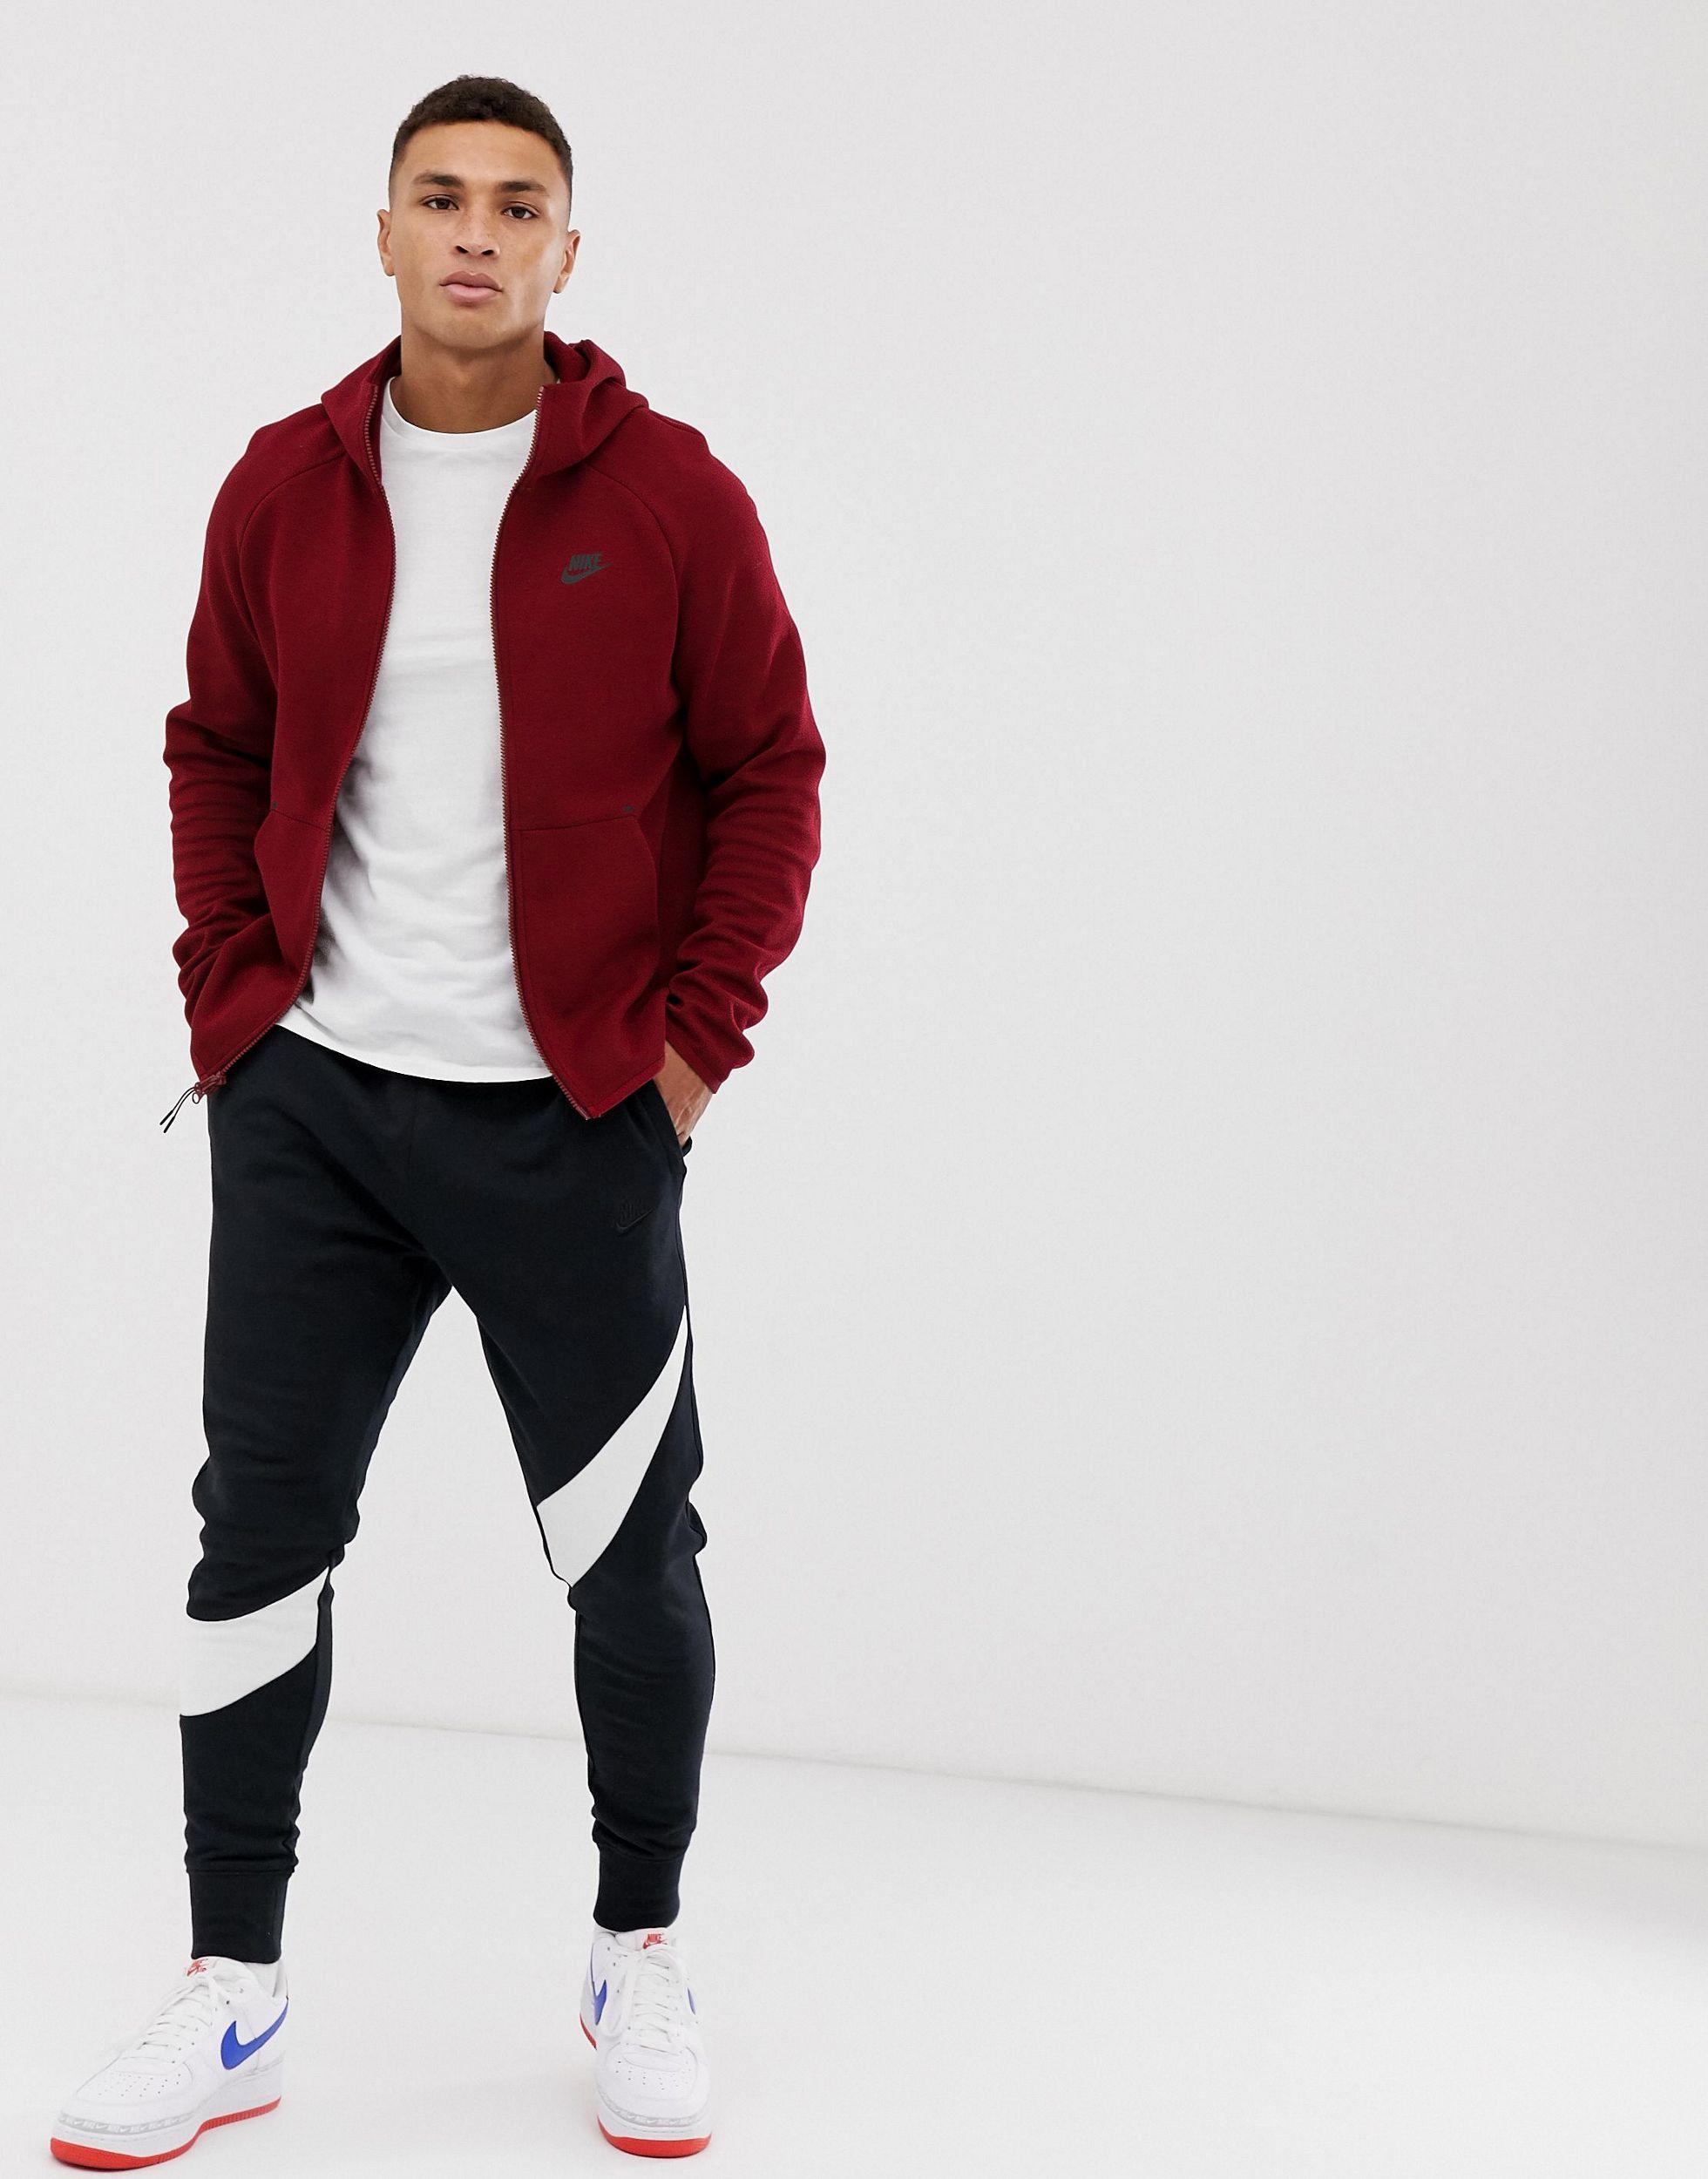 Nike Tech Fleece Hoodie Burgundy in Red for Men - Lyst